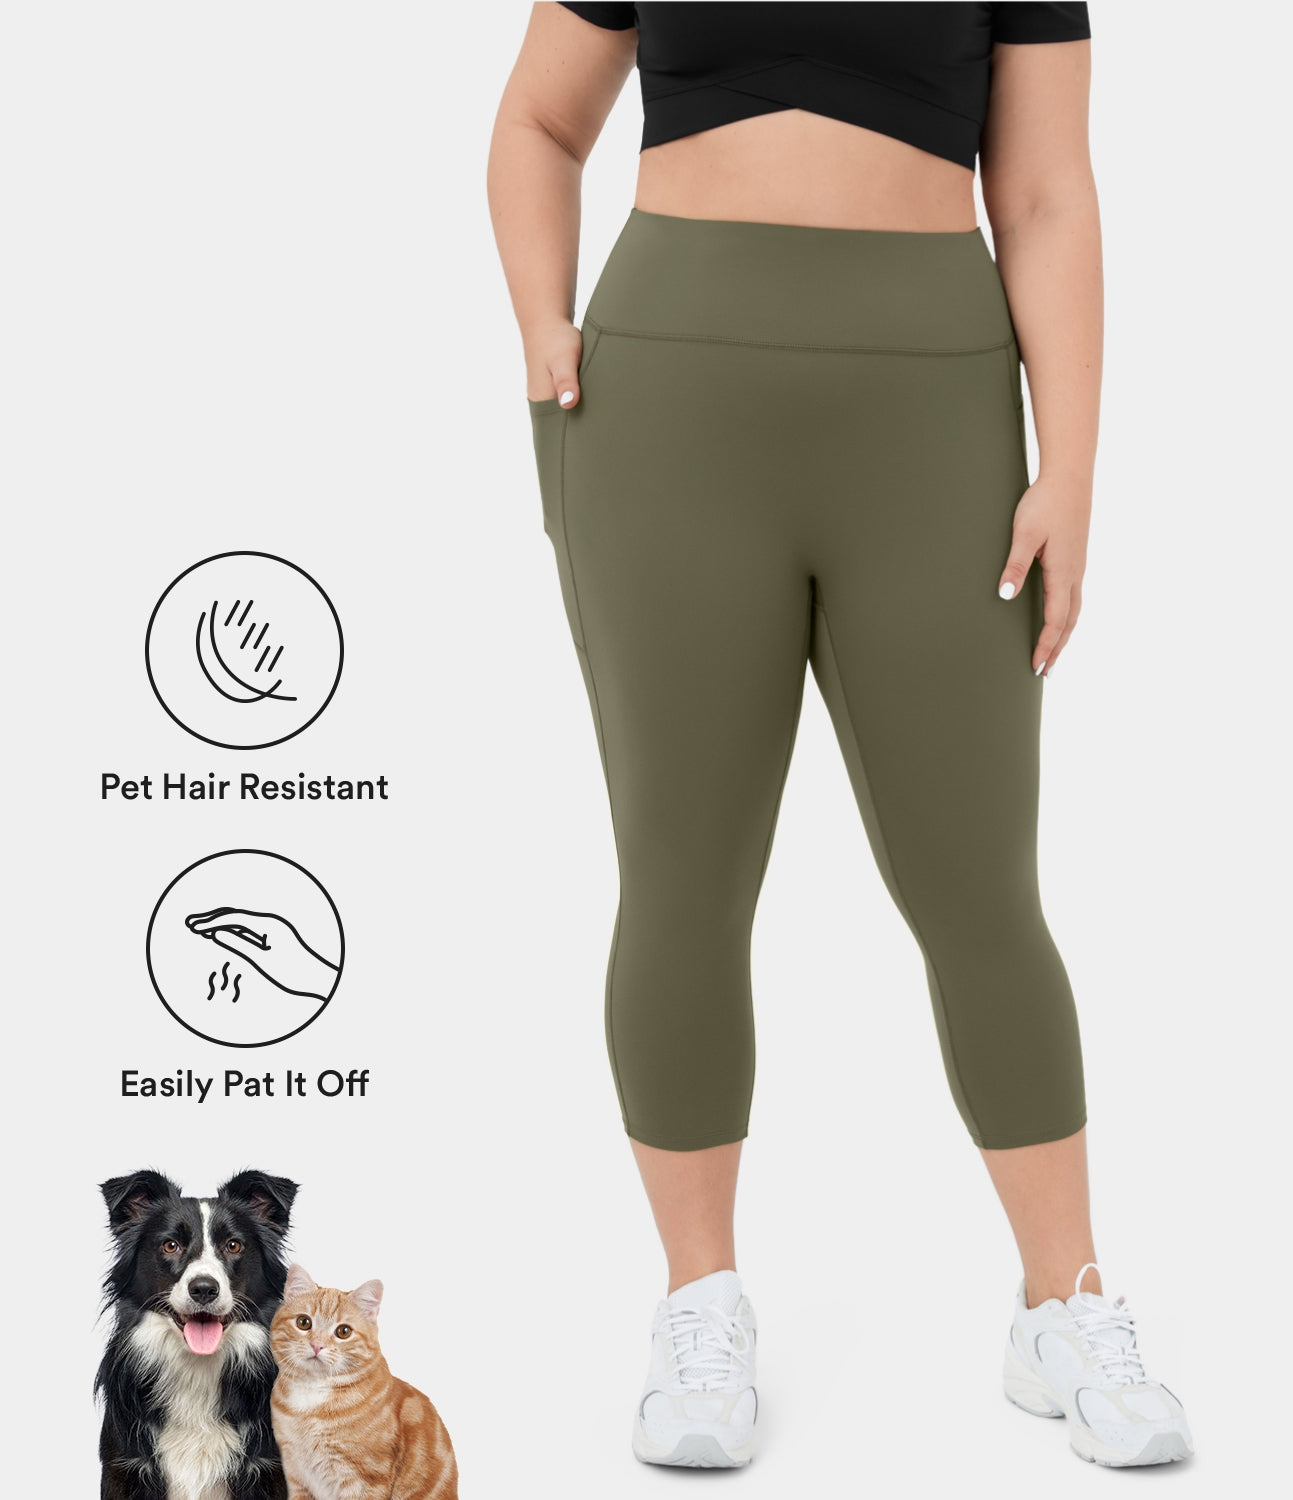 

Halara PatitoffВ® Pet Hair Resistant High Waisted Side Pocket Plus Size Capri Yoga Leggings - Burnt Olive